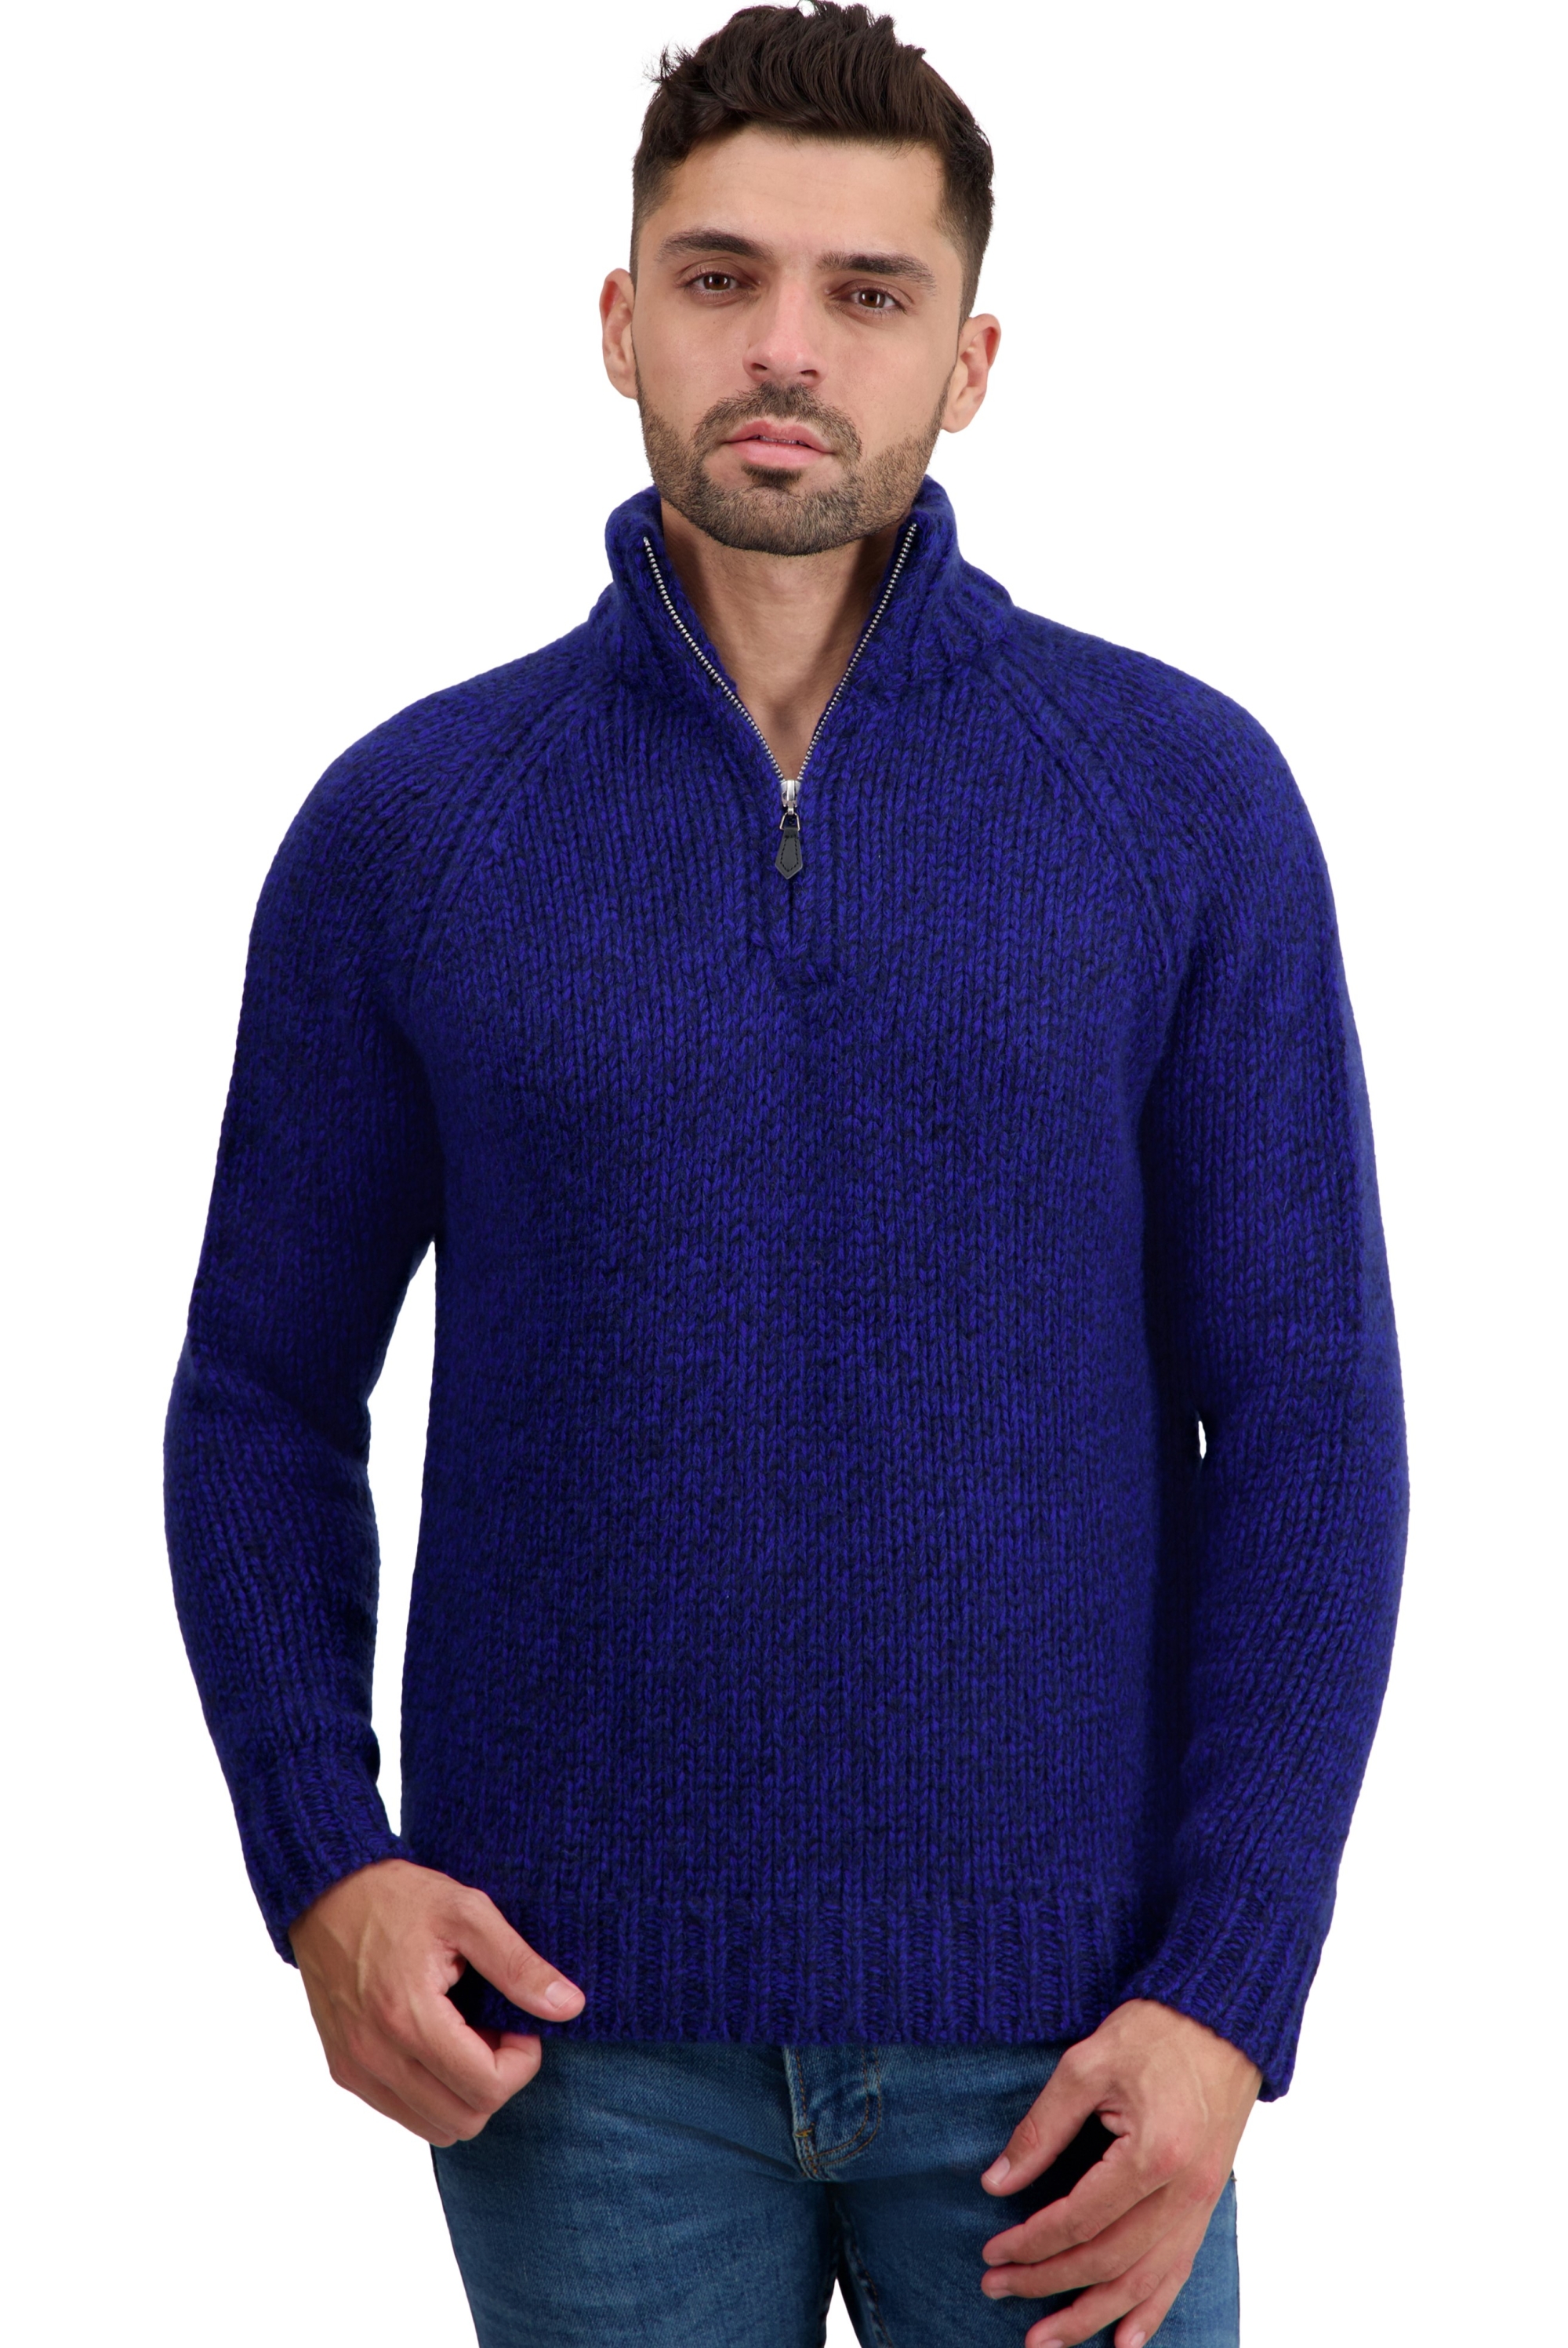 Cashmere men chunky sweater tripoli dress blue bleu regata 3xl